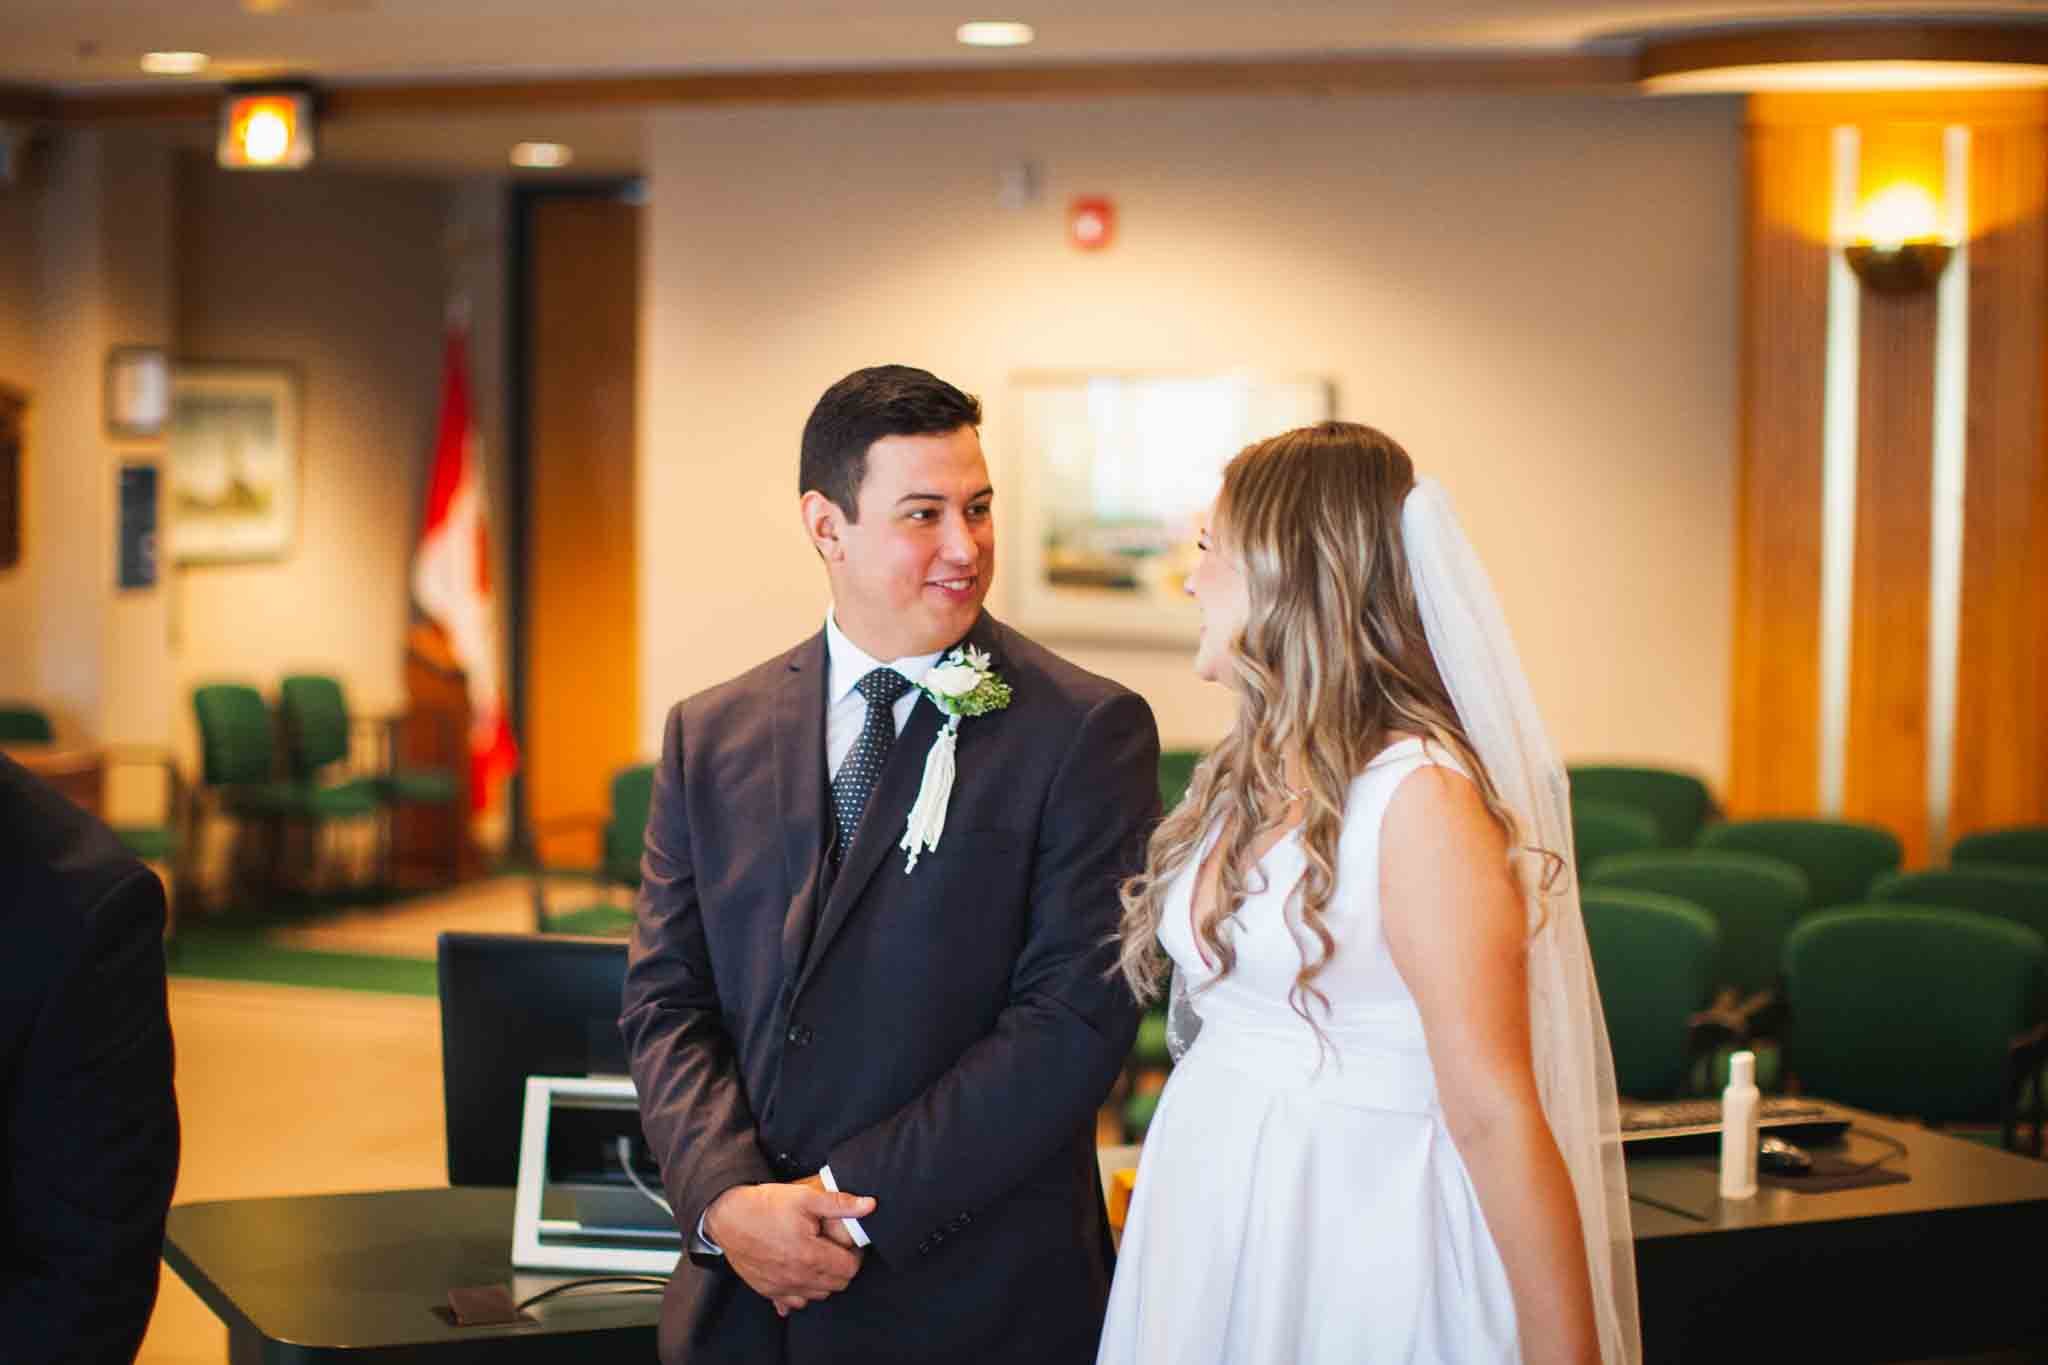 City Hall Wedding Photography Waterloo Ontario-01.jpg